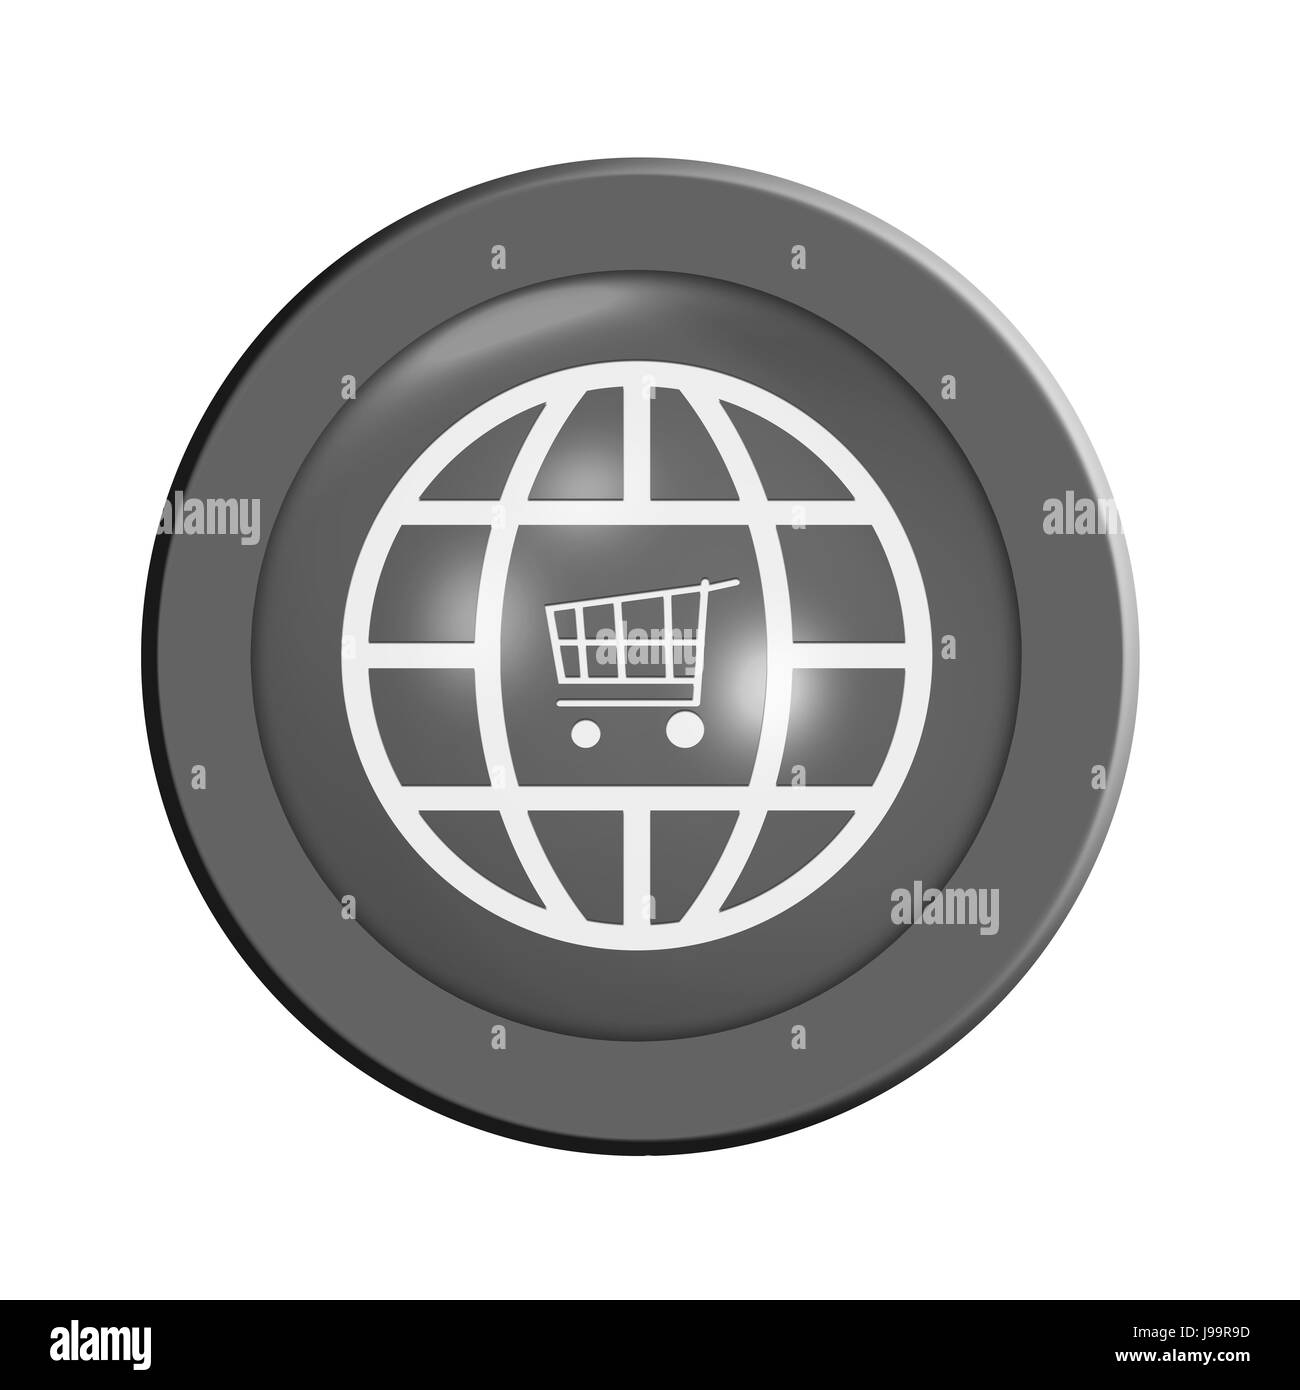 globe, planet, earth, world, global, international, internet, www, Stock Photo